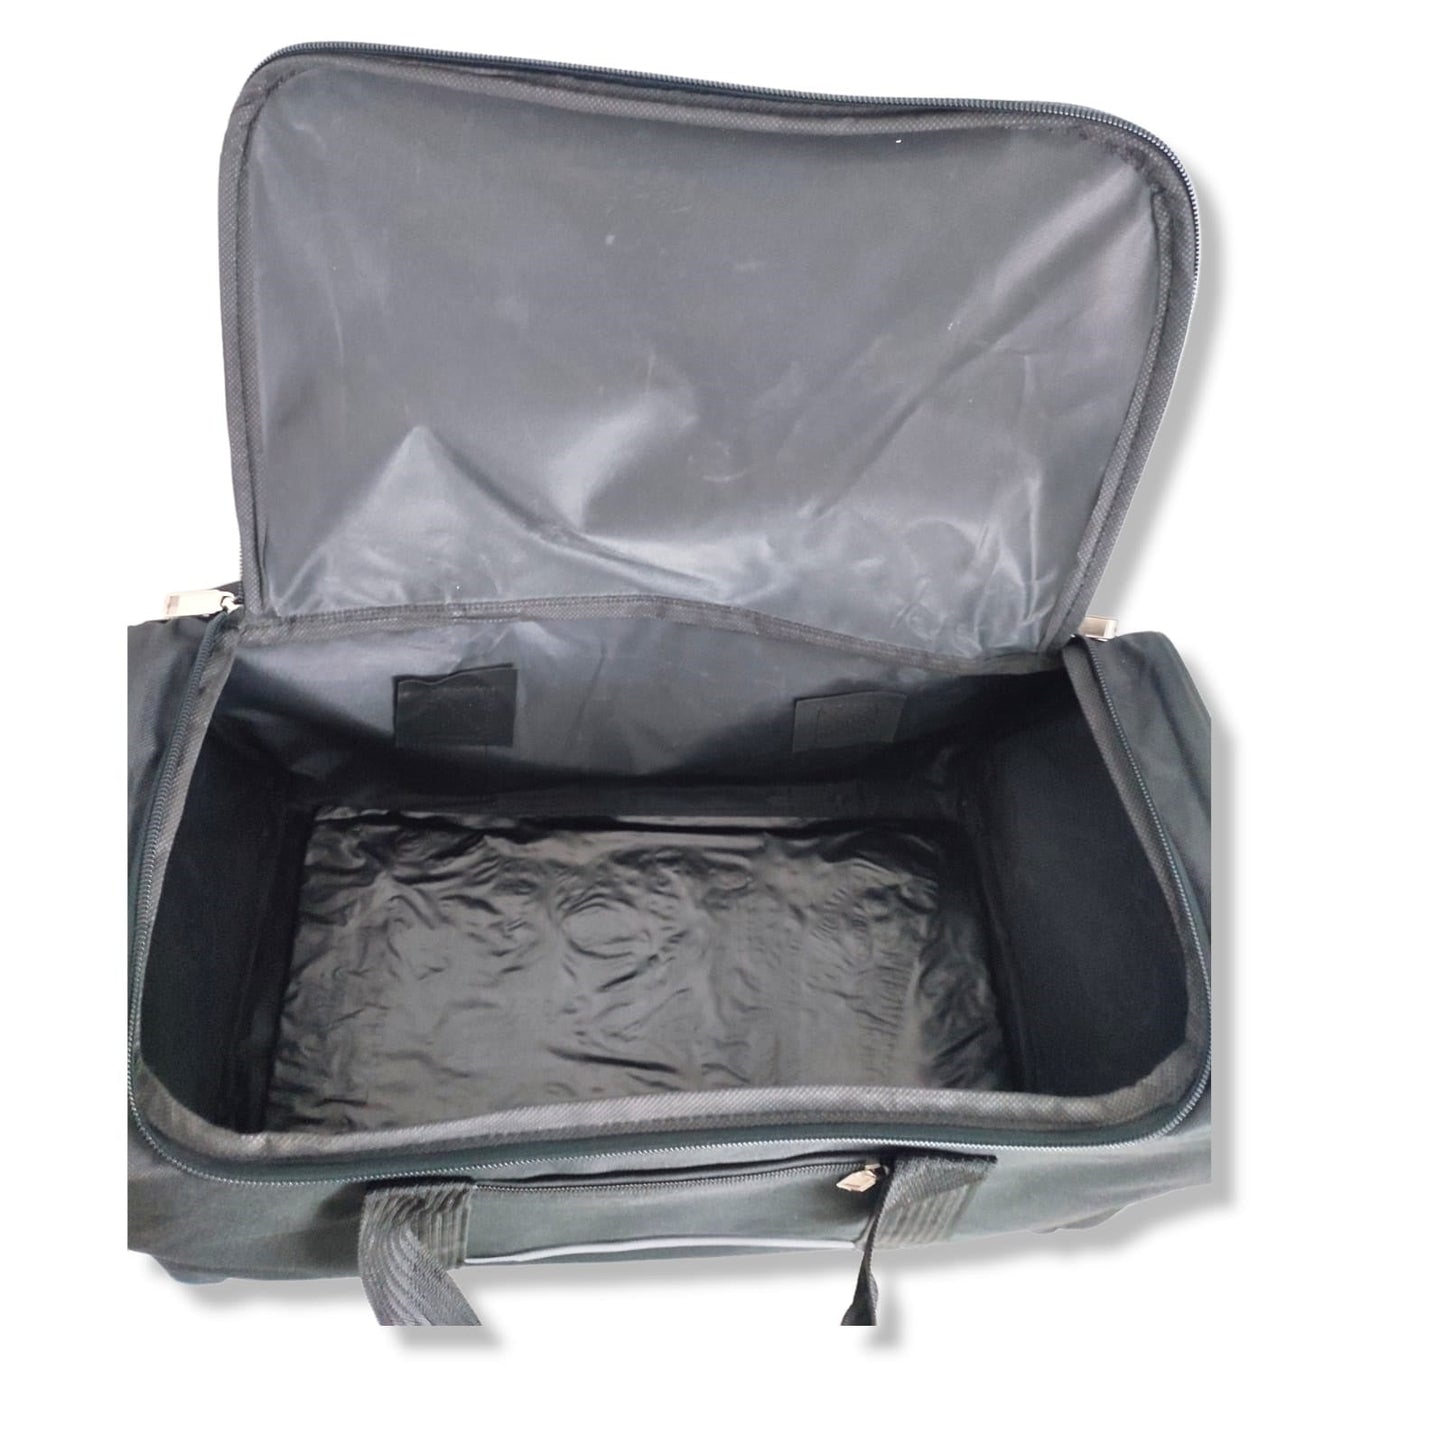 Easy Luggage Lightweight Holdall Duffle Cargo Black Travel Cabin Gym Bag Size- 18" 22" 25"